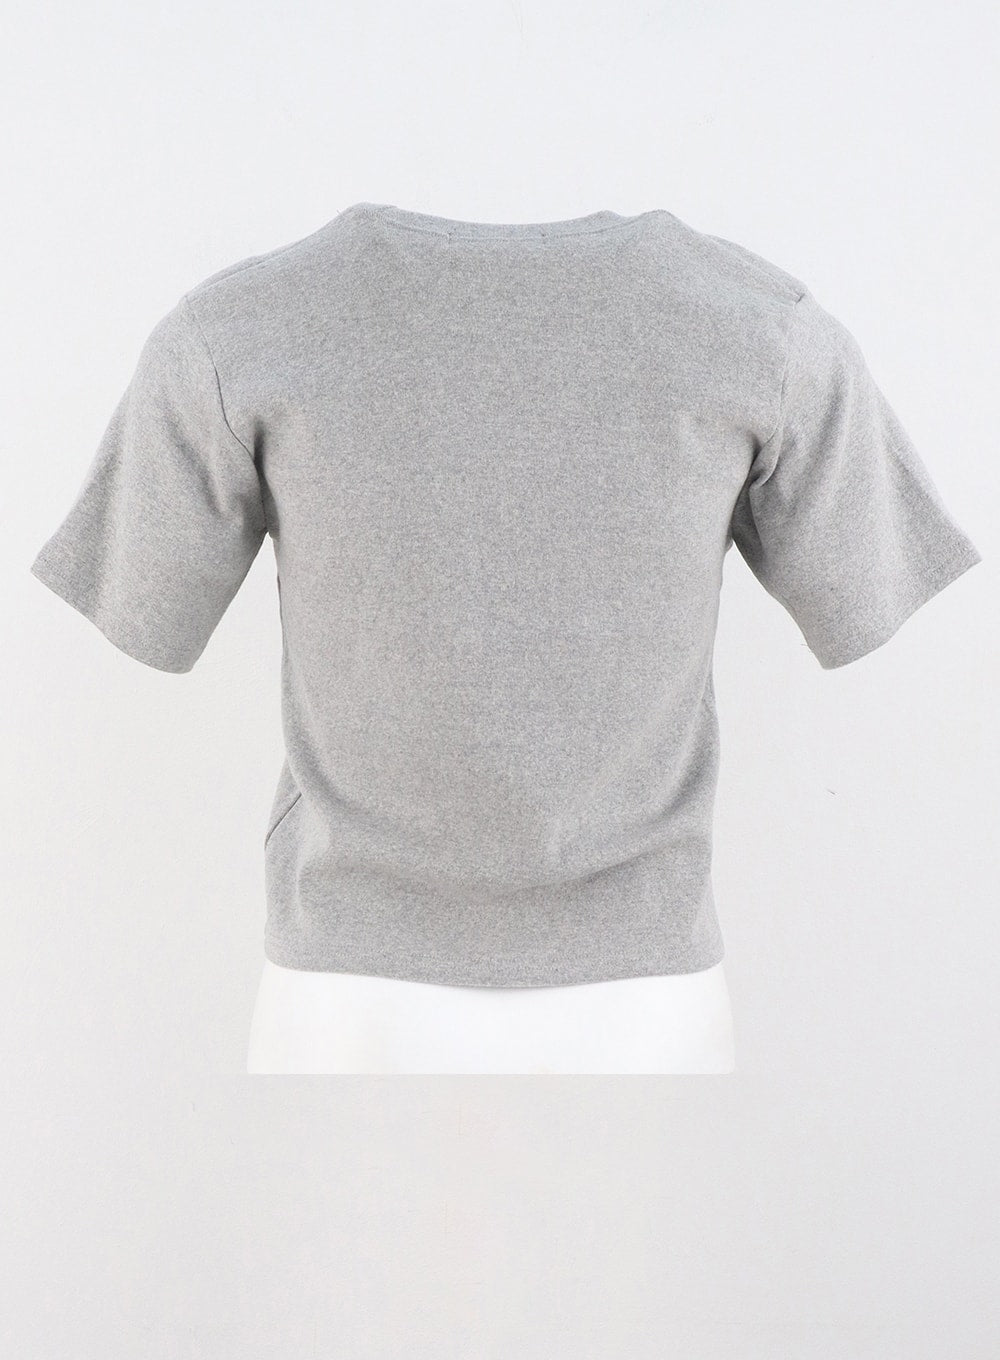 fleece-lined-short-sleeve-tee-og328